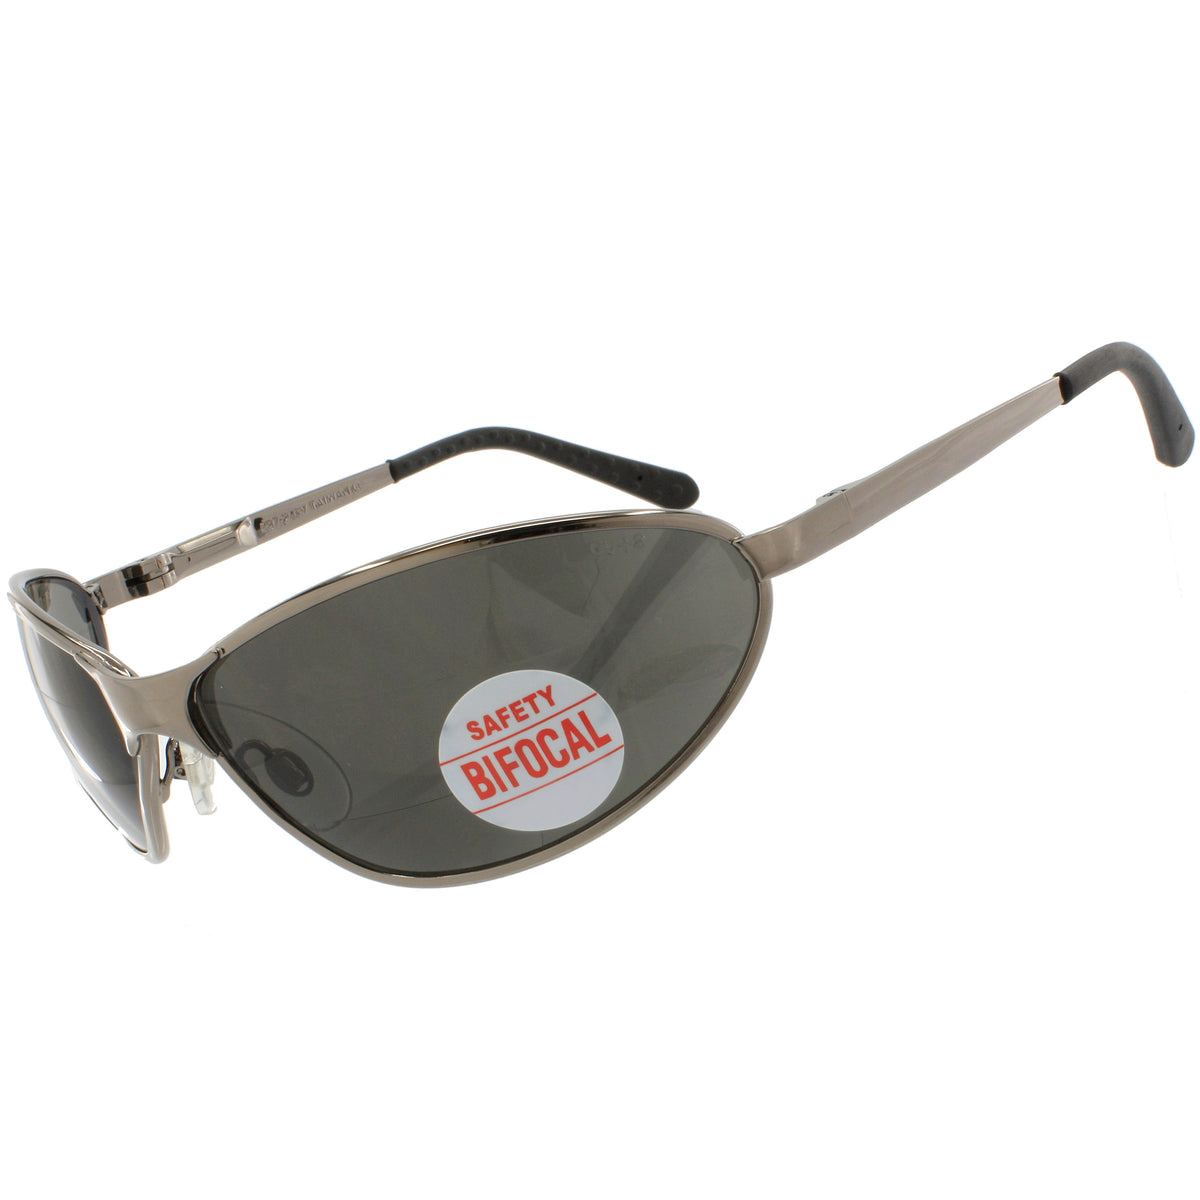 Barcelona Bifocal Magnifying Safety Glasses Gun Metal Frame